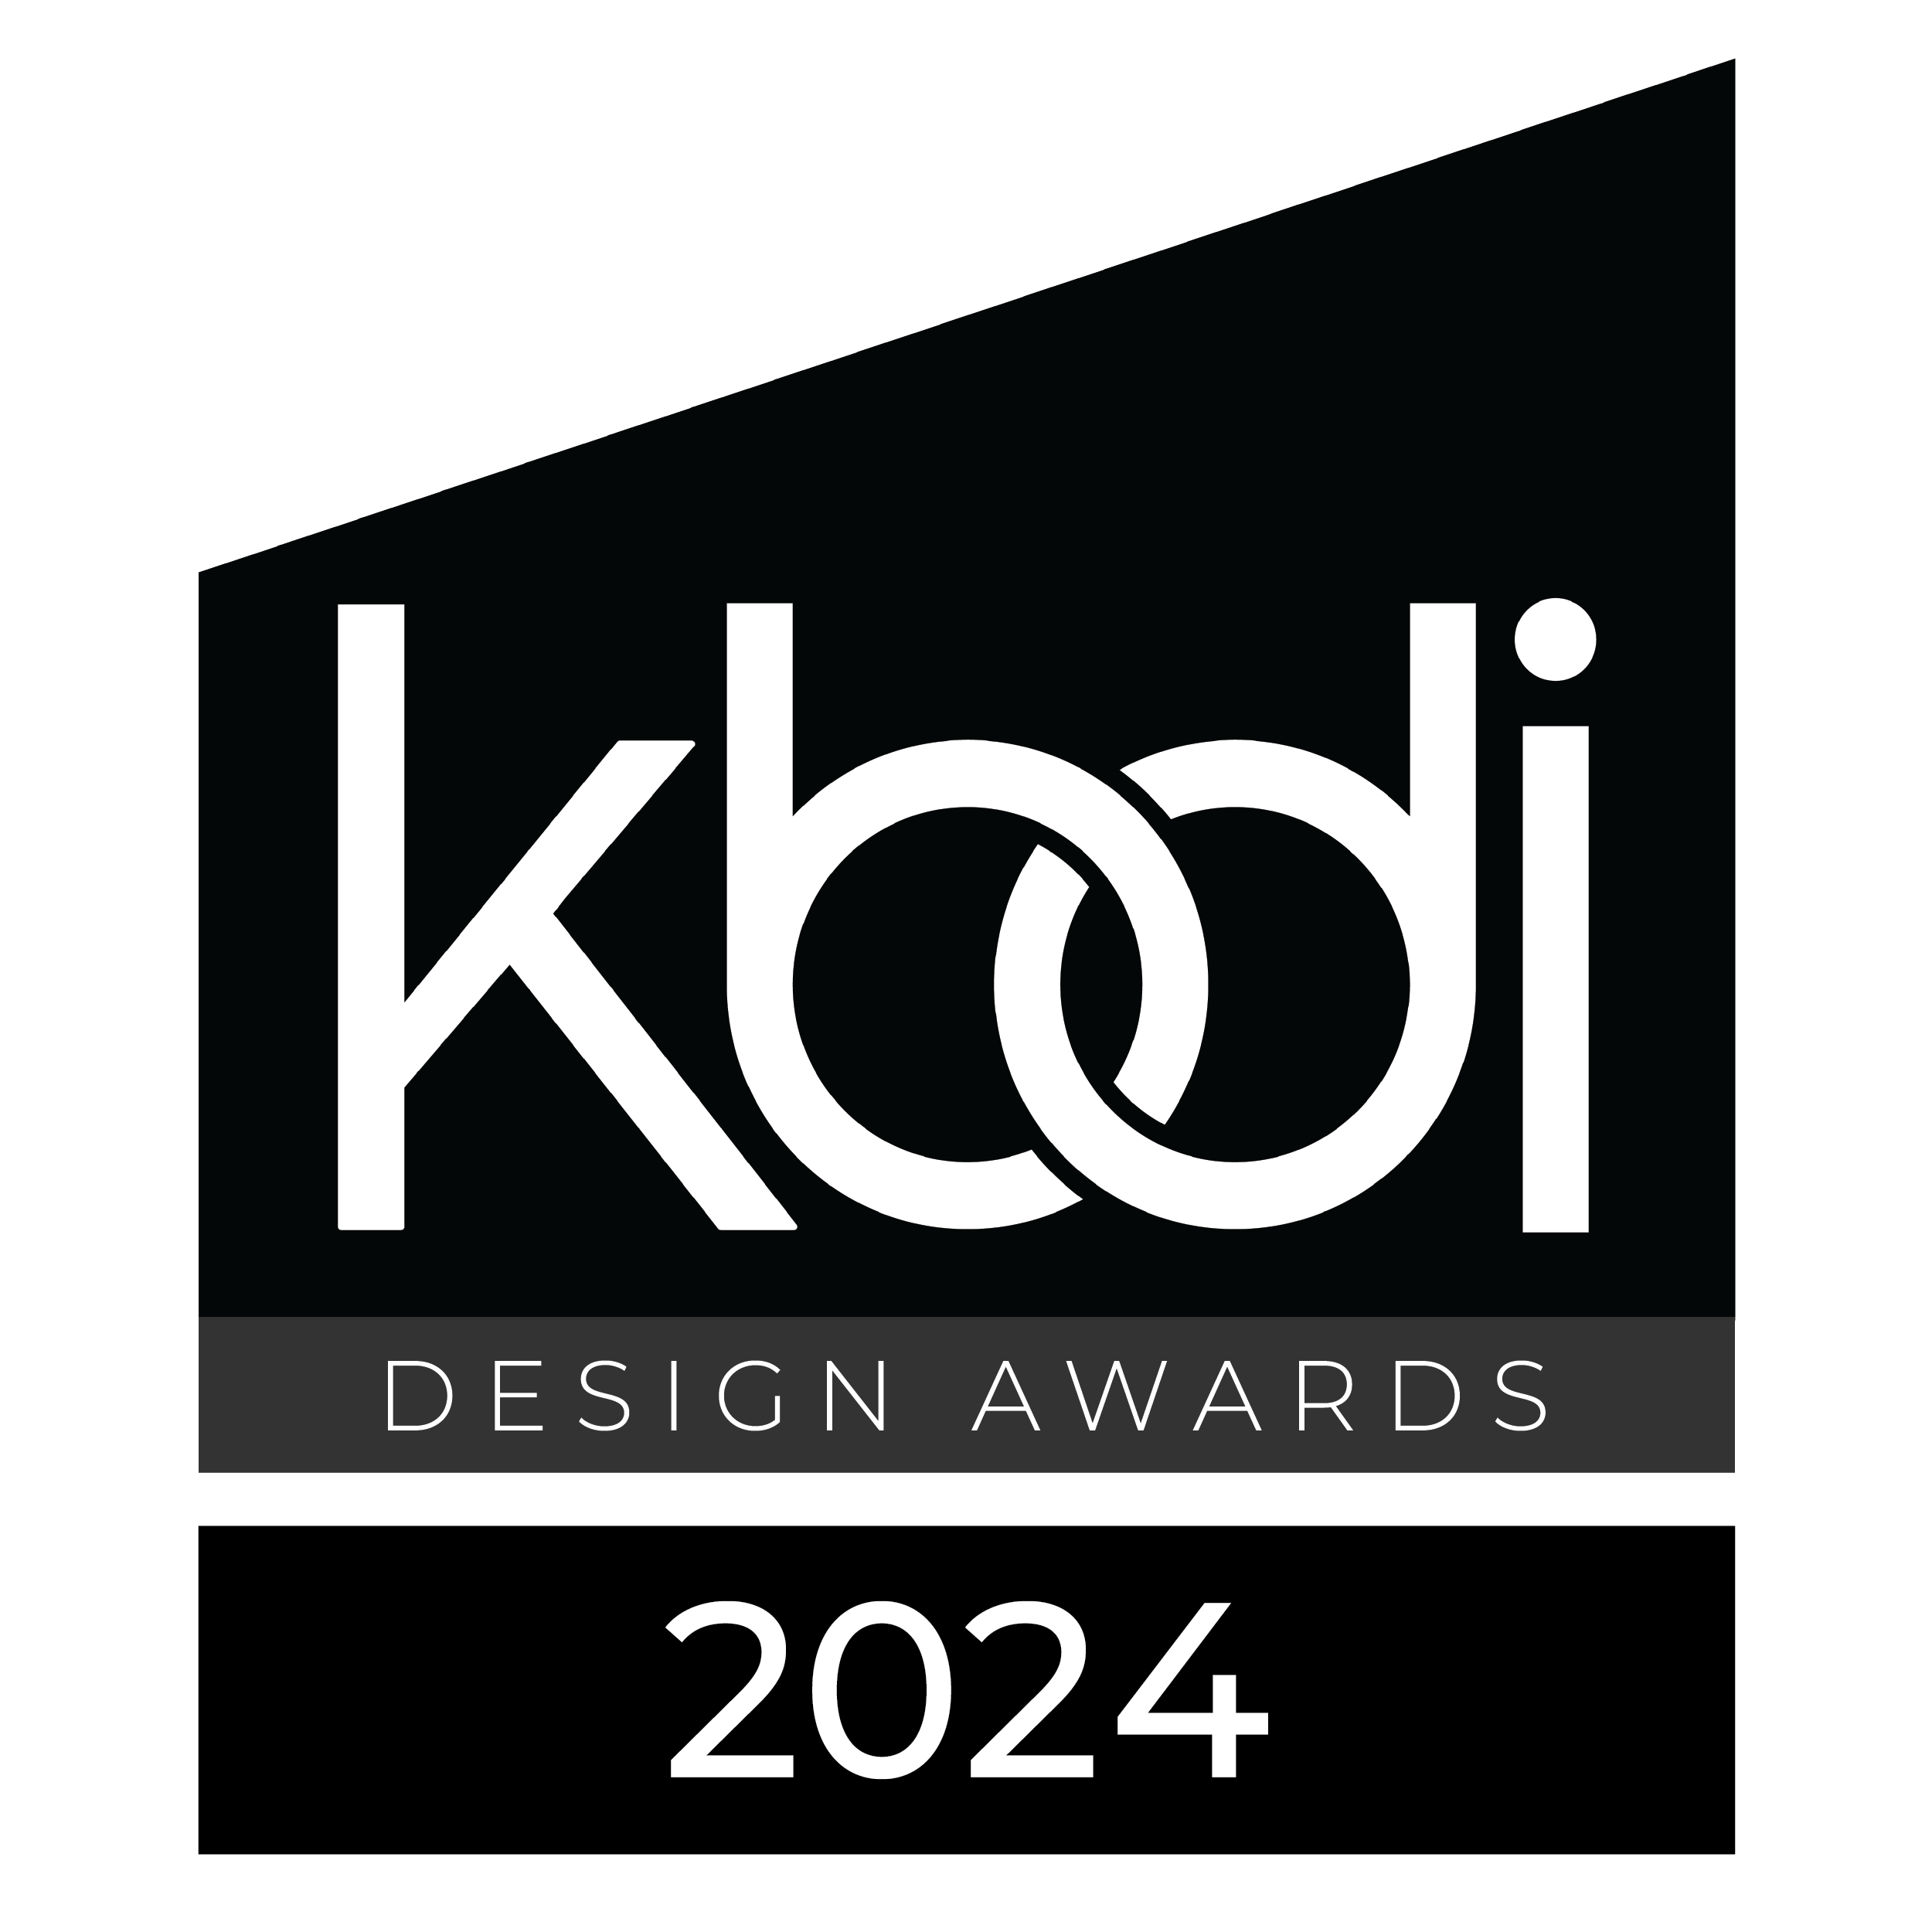 KBDi Design Awards 2024